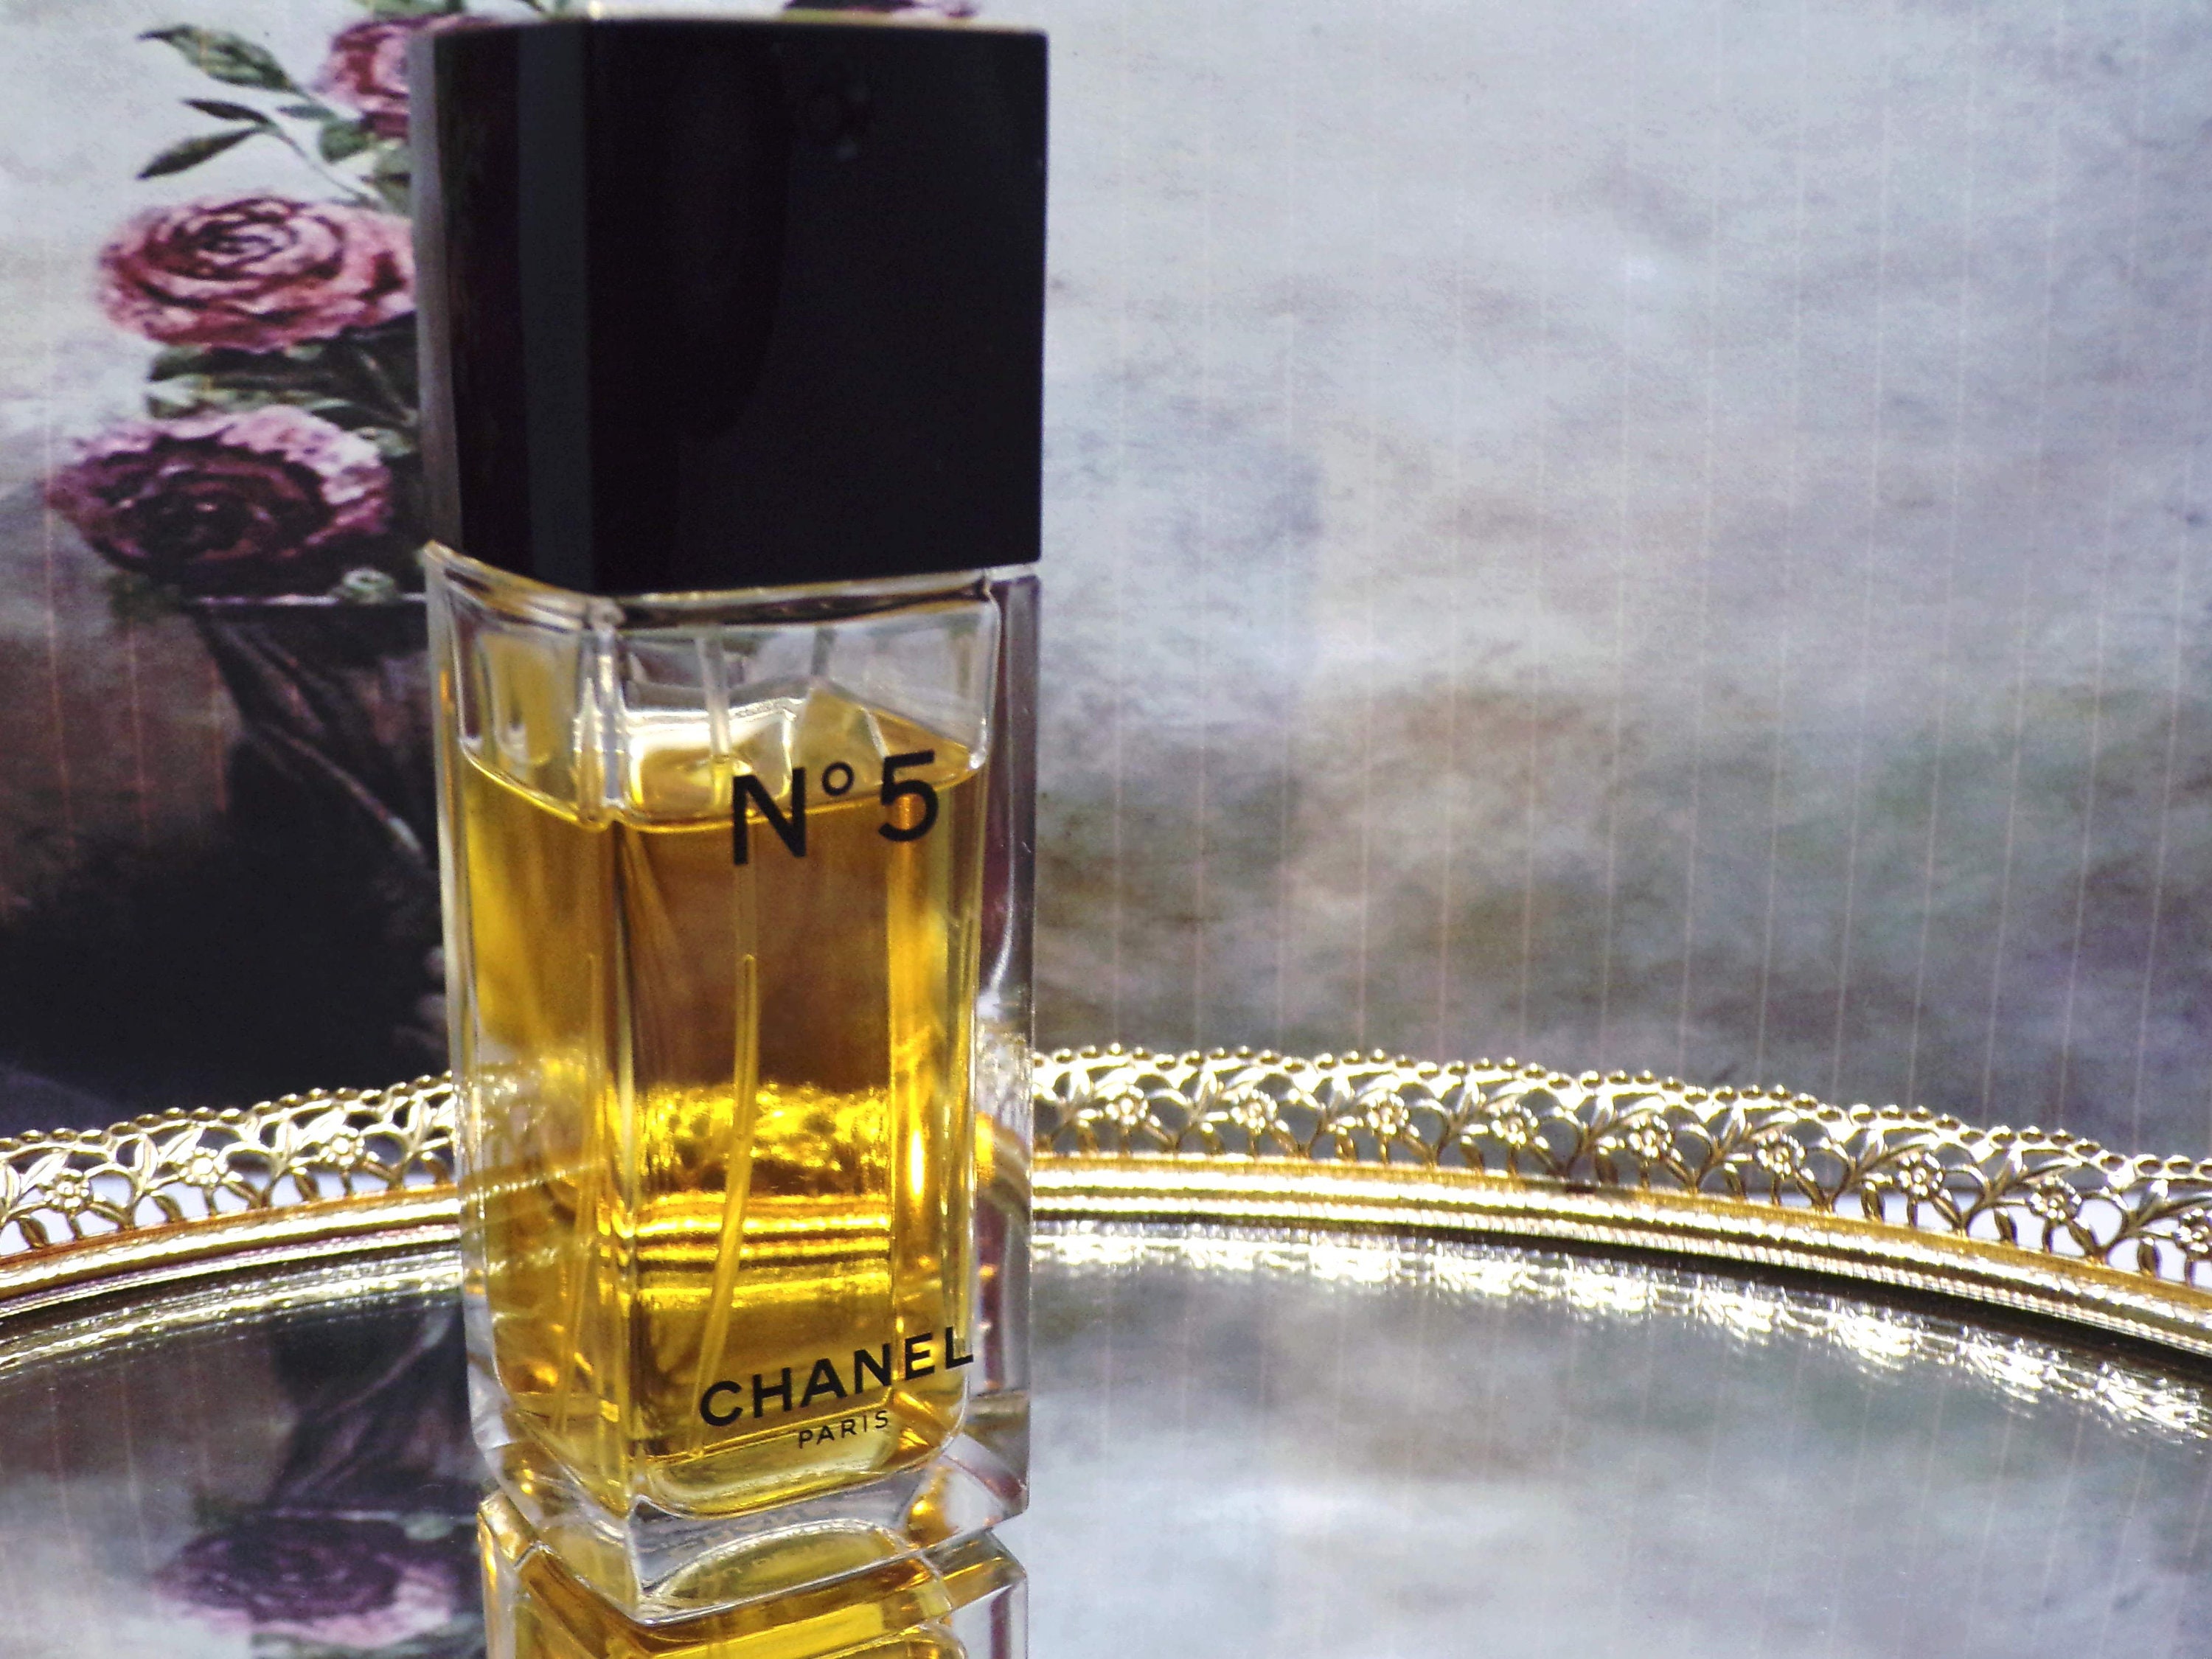 CHANEL Perfume - Chanel No 5 Perfume - Eau de Toilette Spray - 1.2